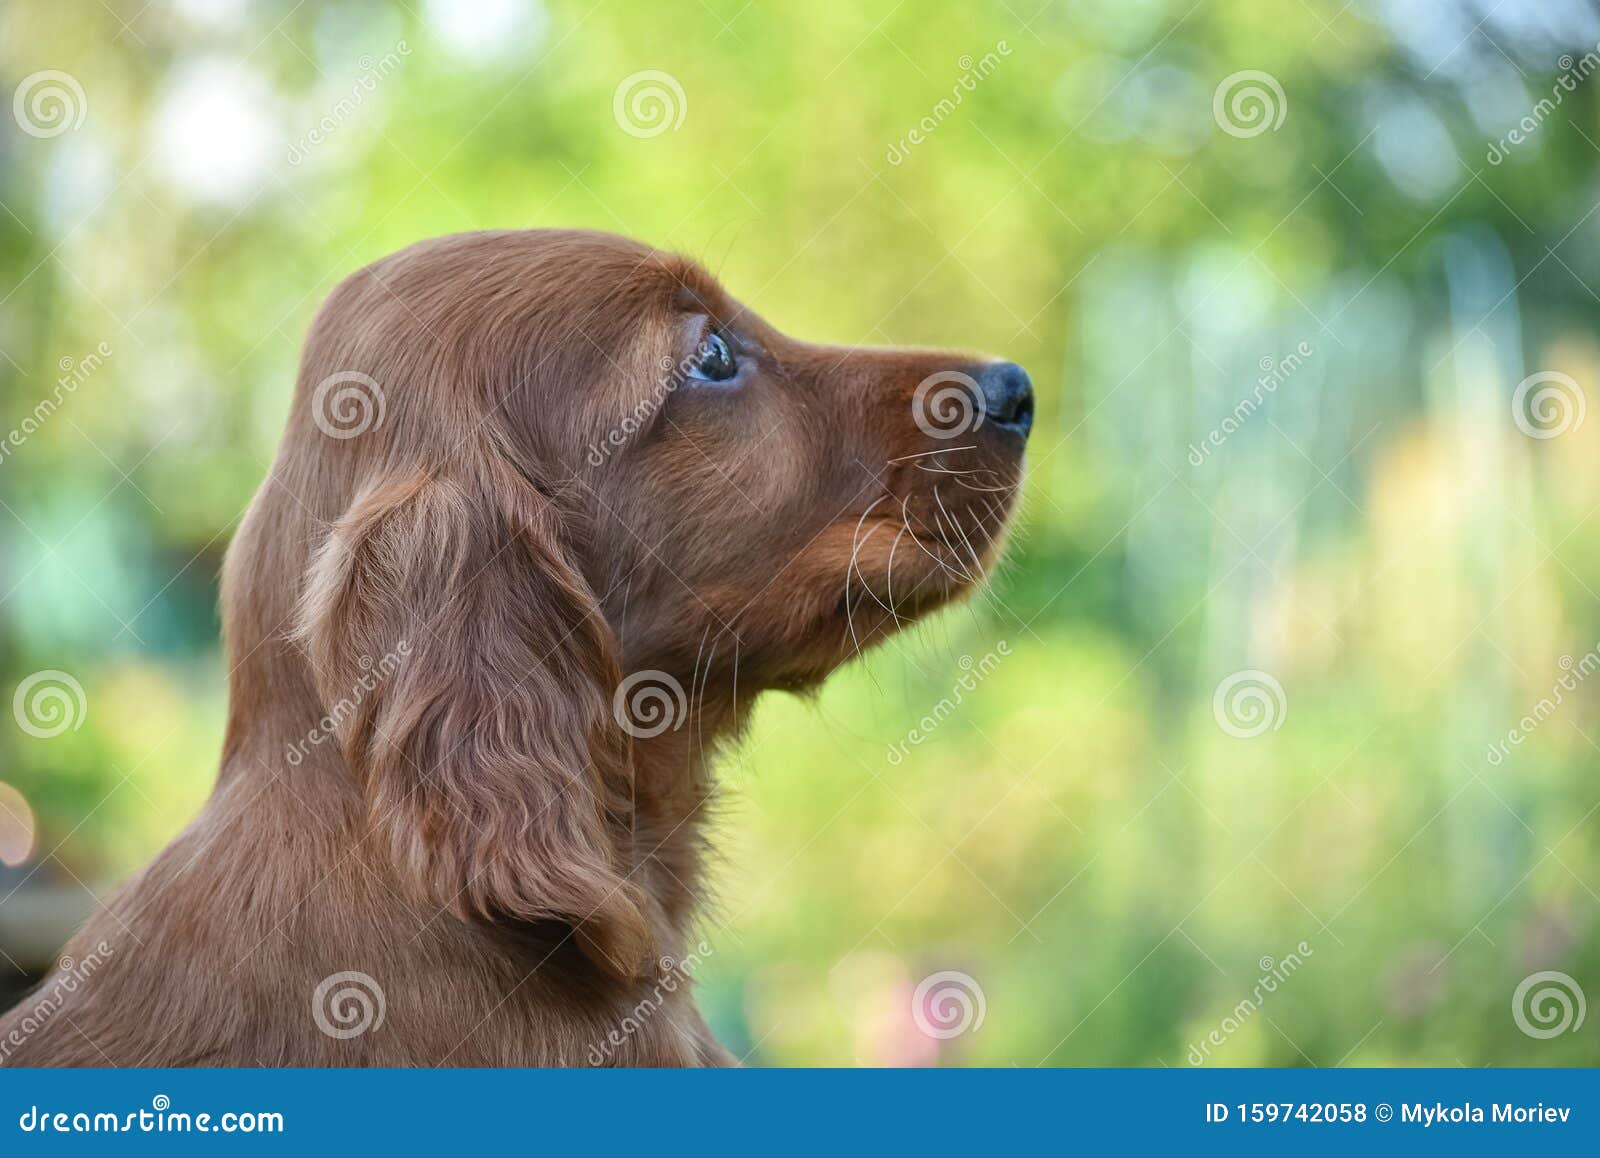 Red Irish Setter Dog Head Portrait on Nature Stock Photo - of nose, birdhunt: 159742058